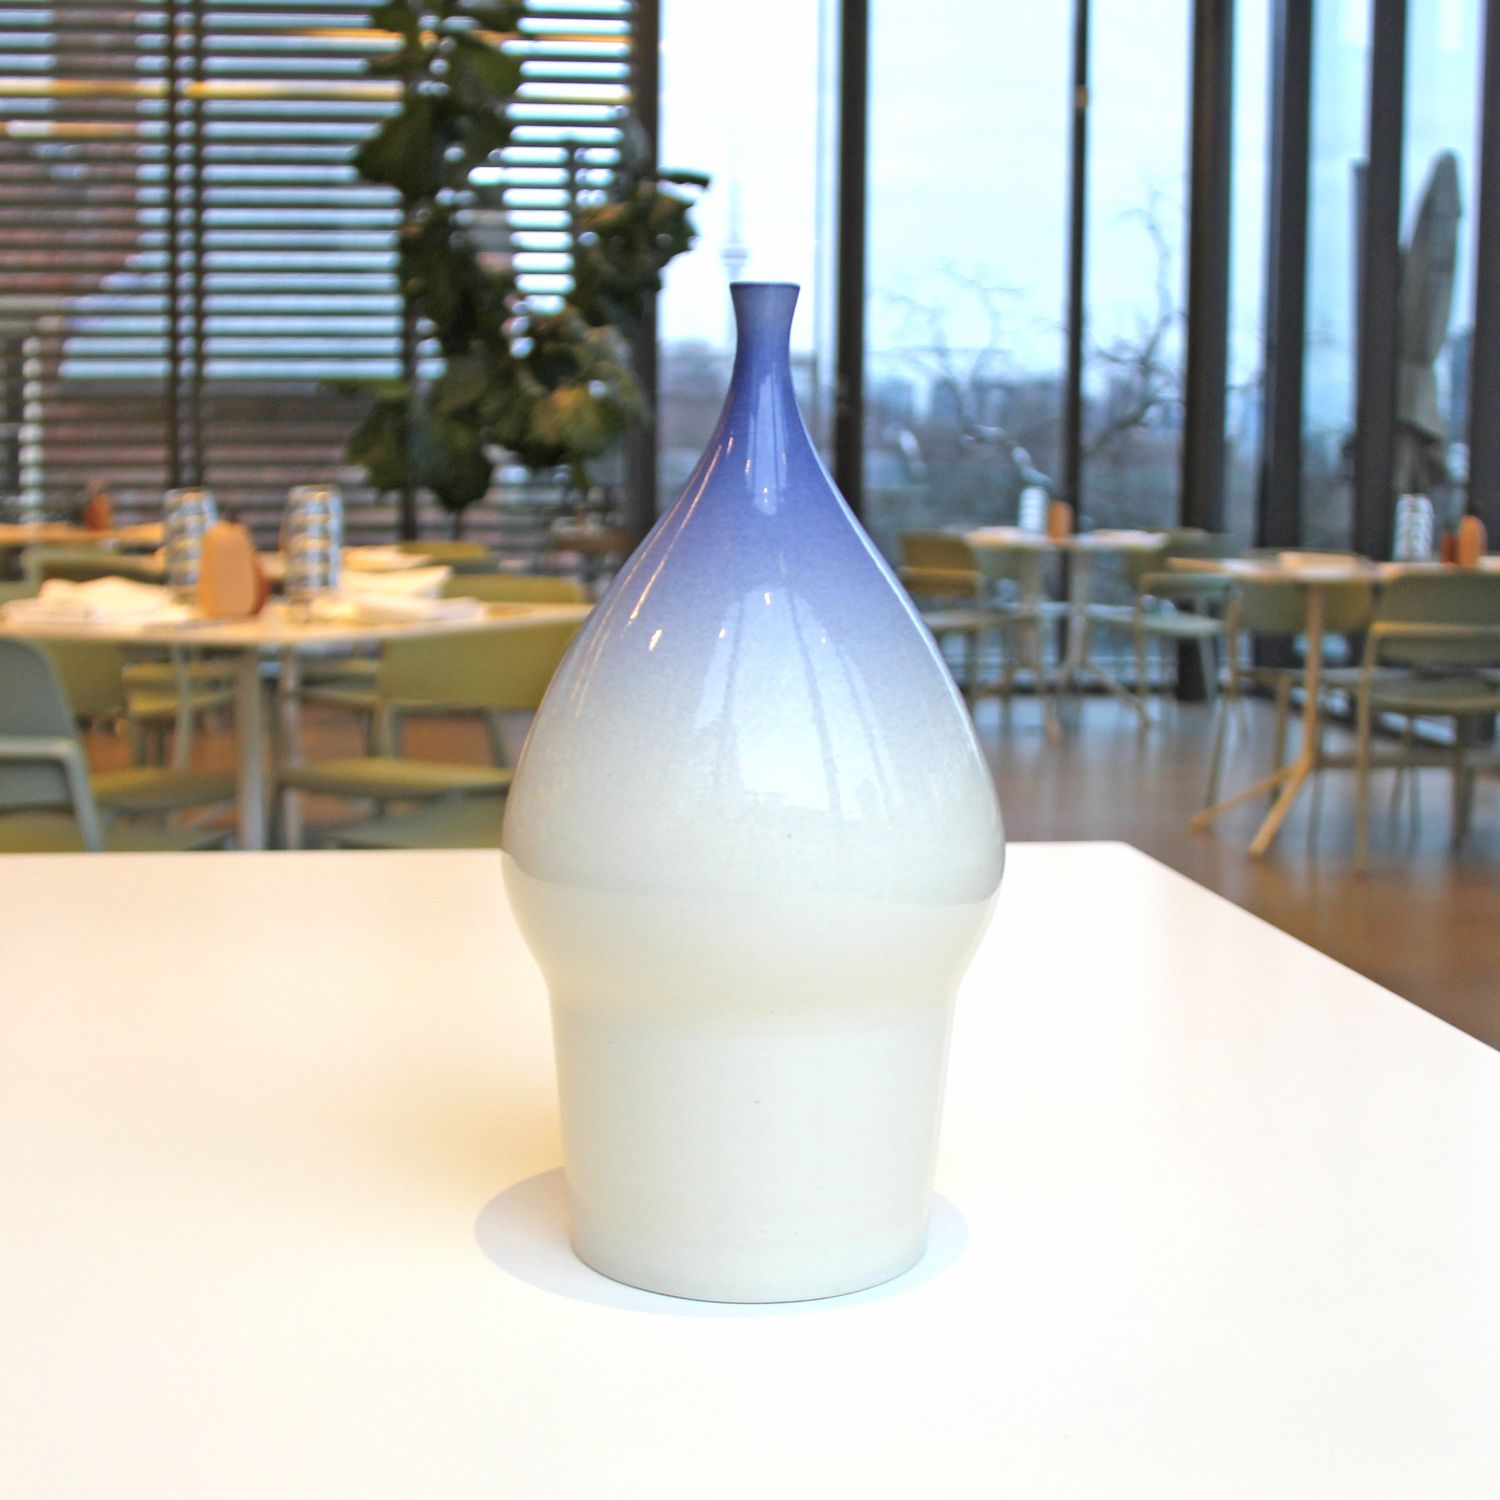 Annika Hoefs: Large Gradiant Vase Product Image 2 of 2